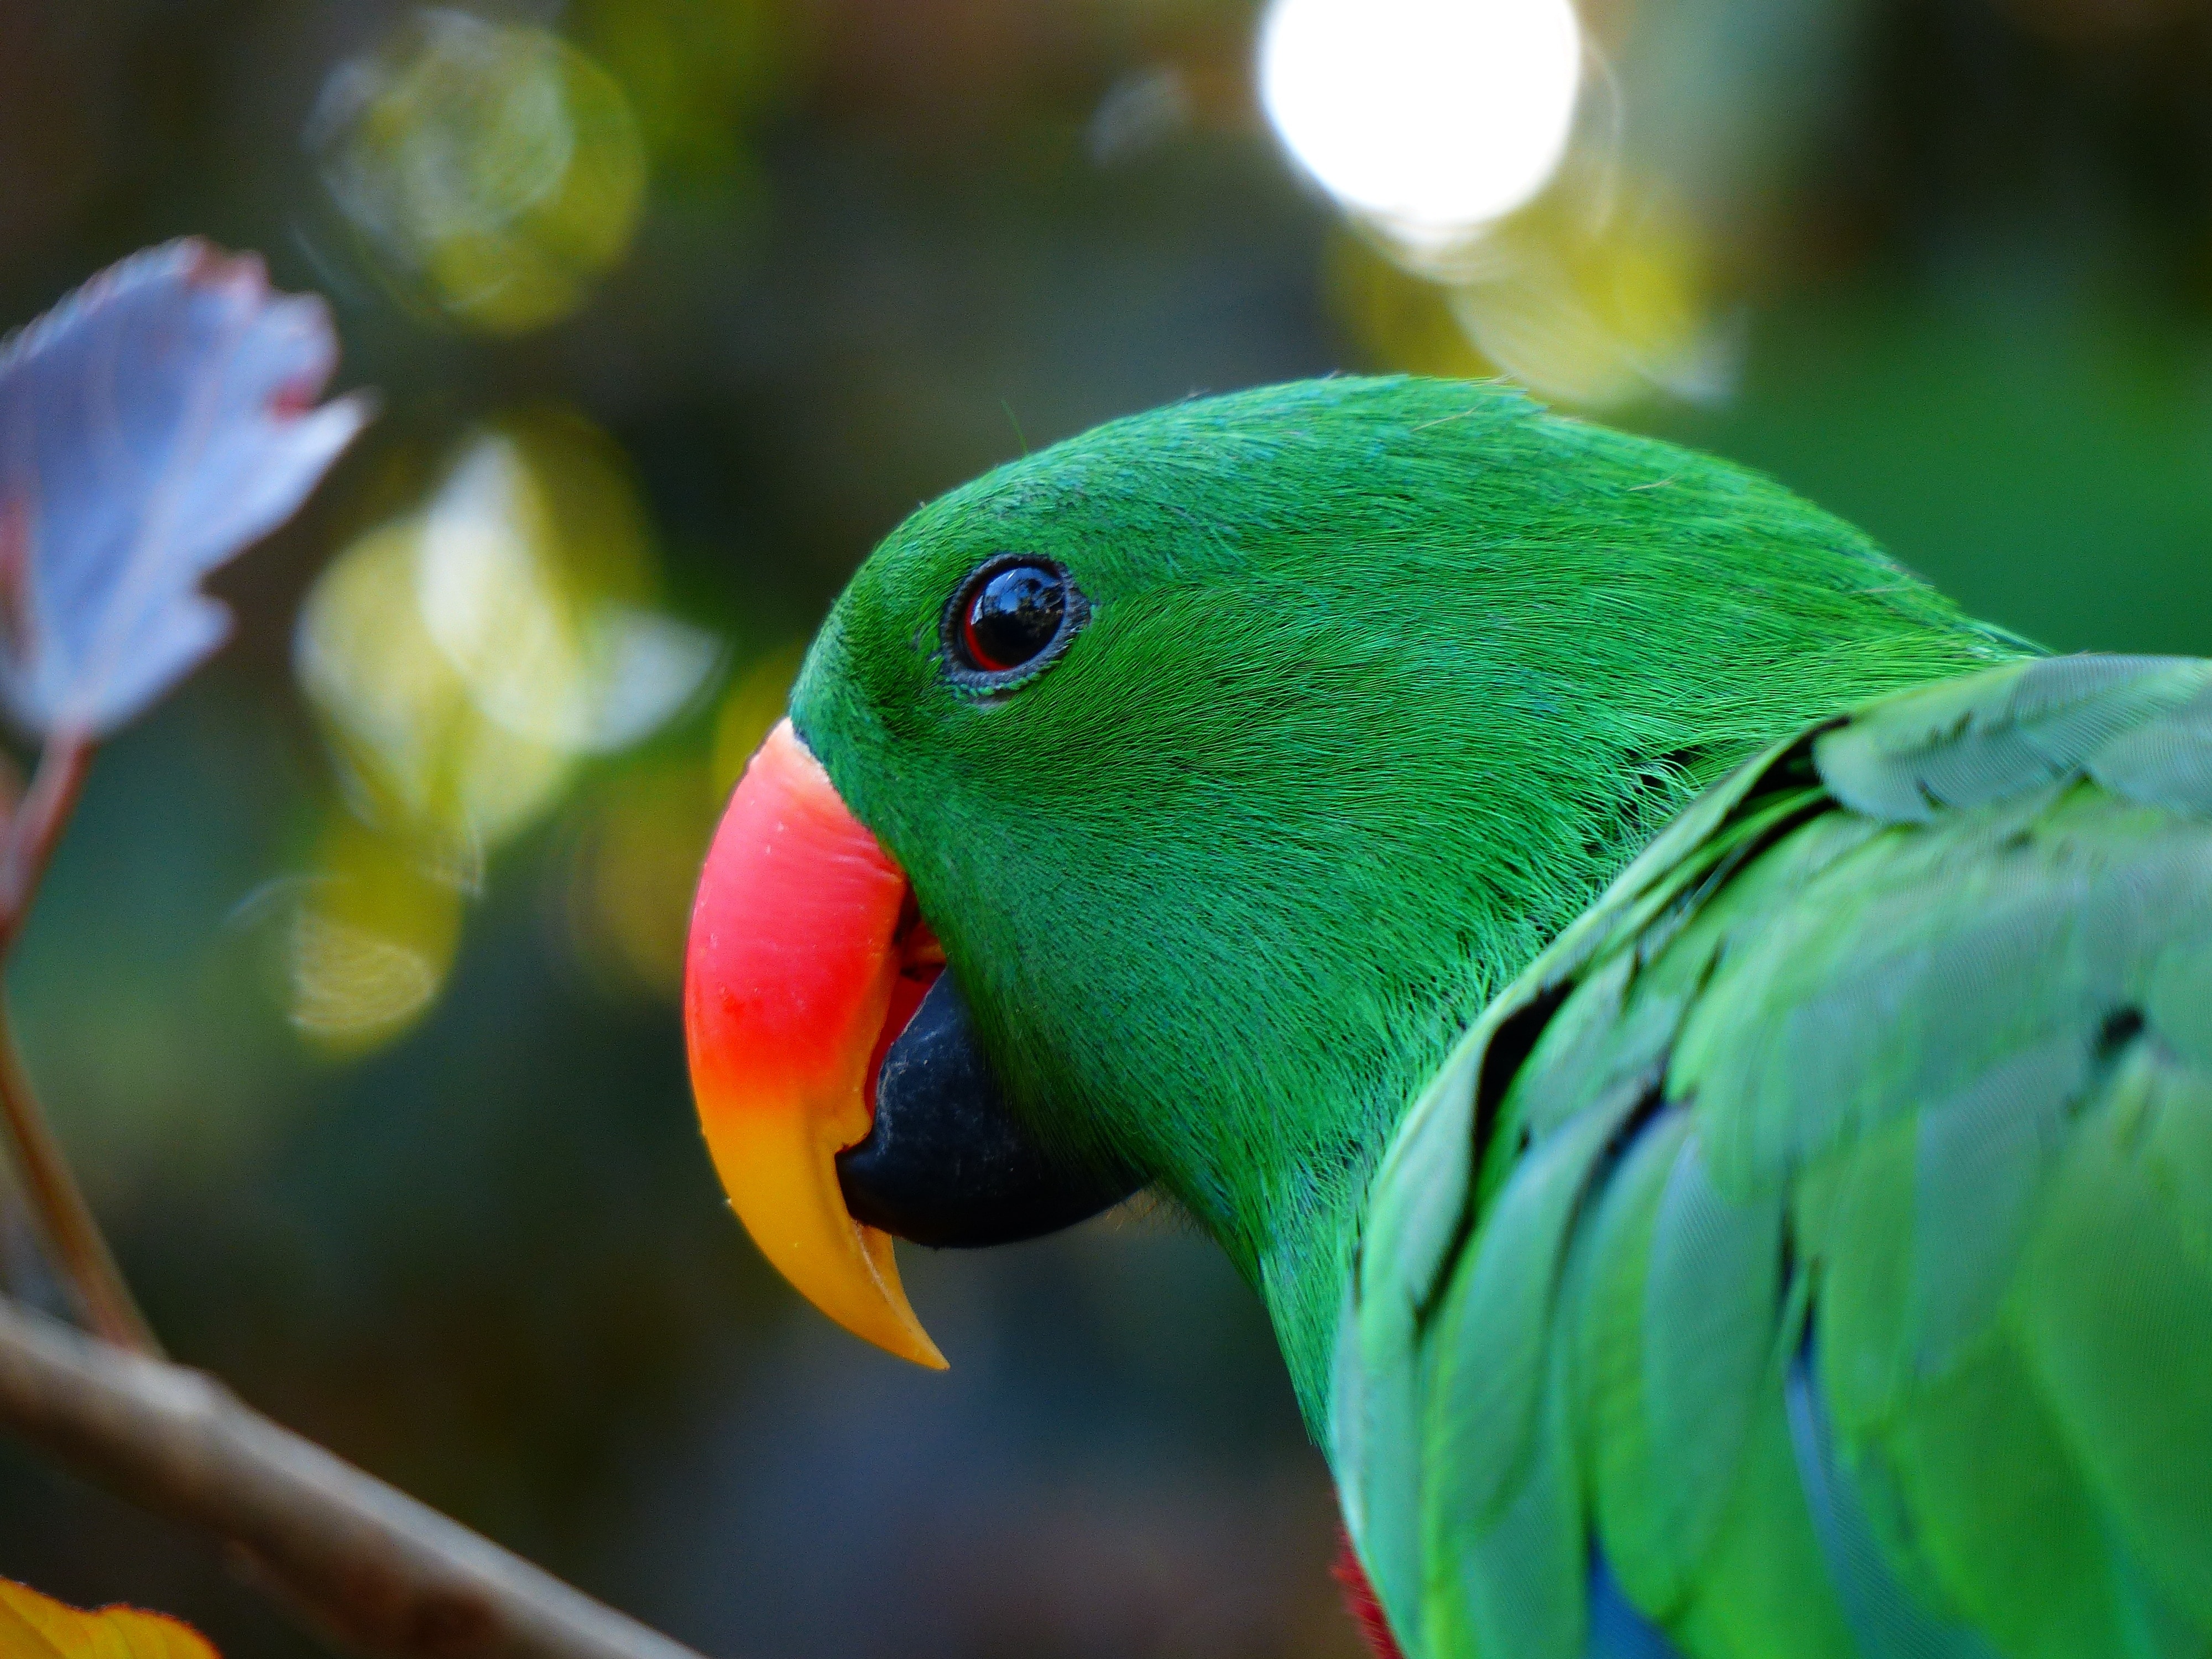 Bill, Green, Plumage, Parrot, Red Orange, parrot, one animal